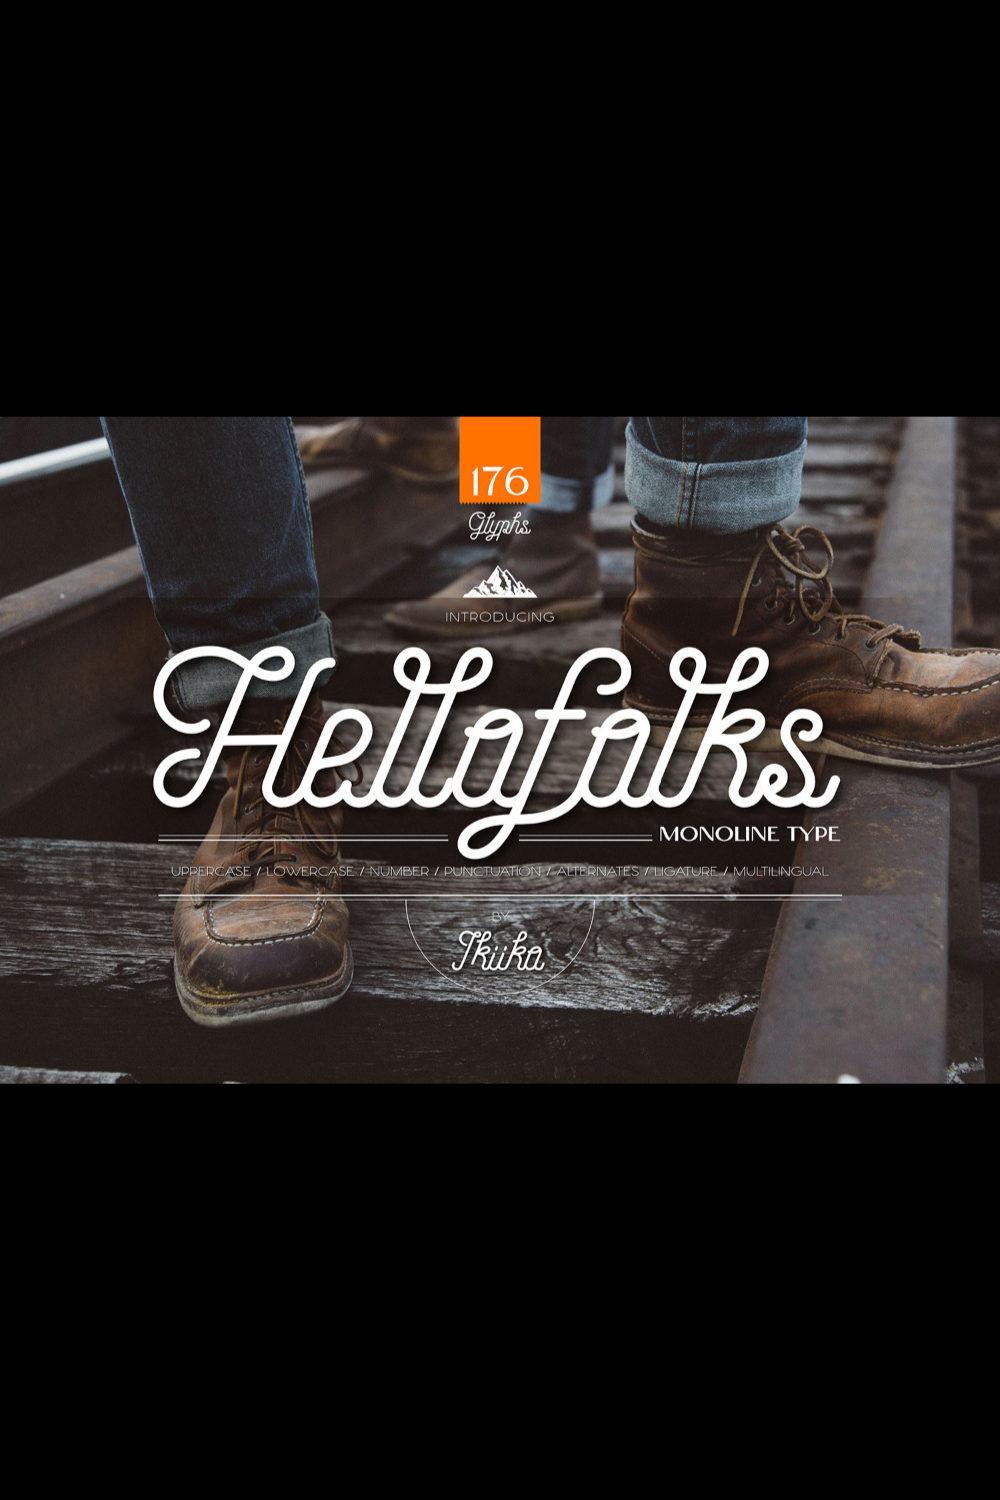 Hellofolks - Monoline Typeface pinterest preview image.